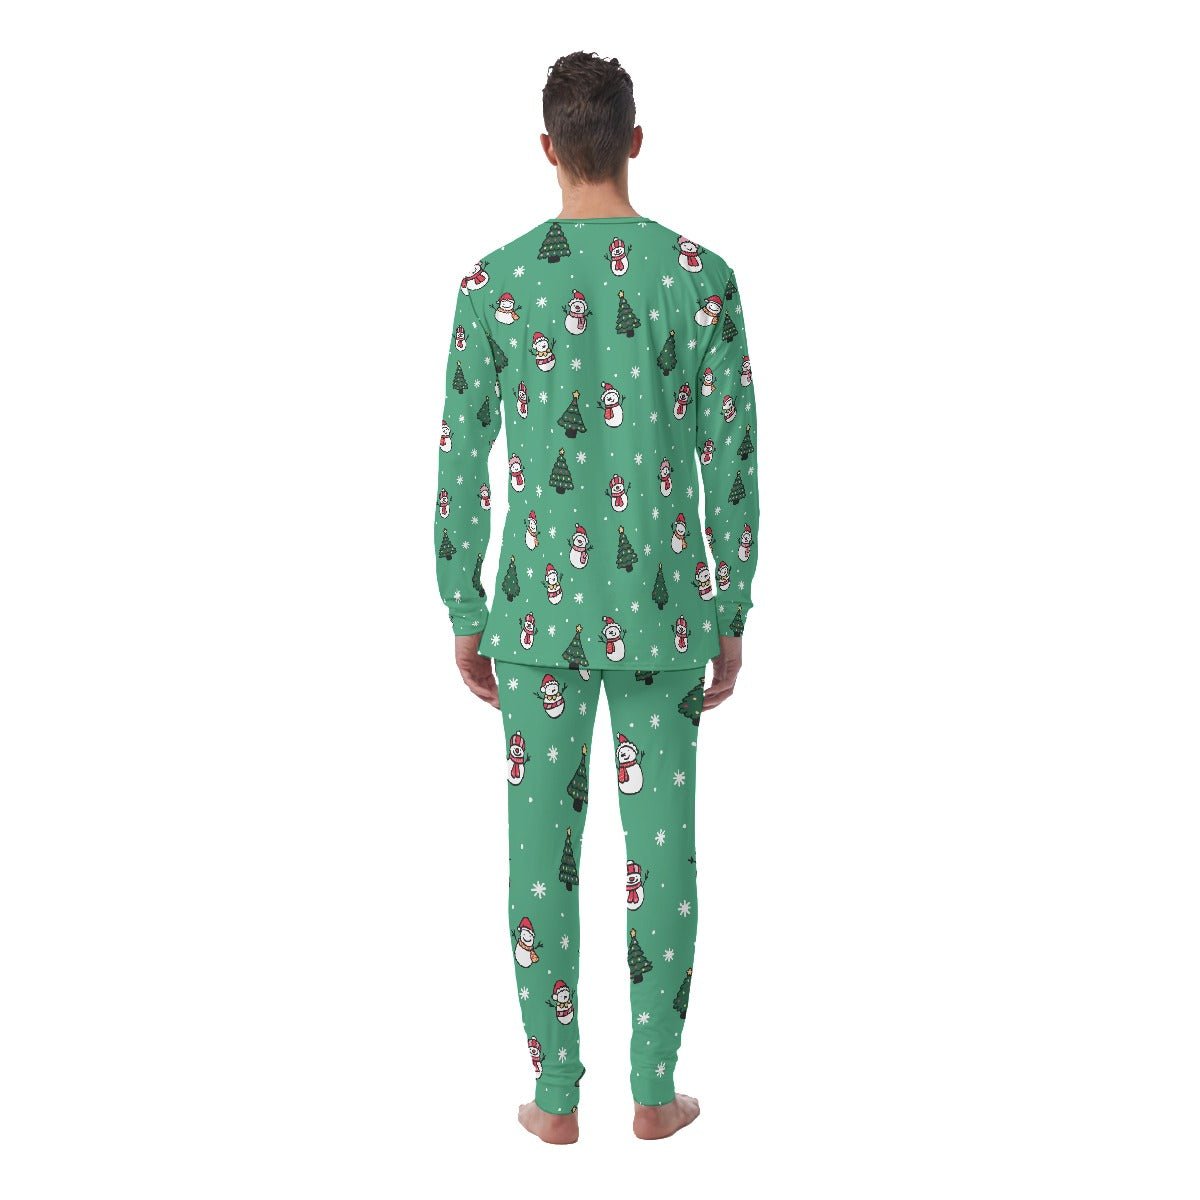 Men's Christmas Pyjamas - Green Snowman - Festive Style